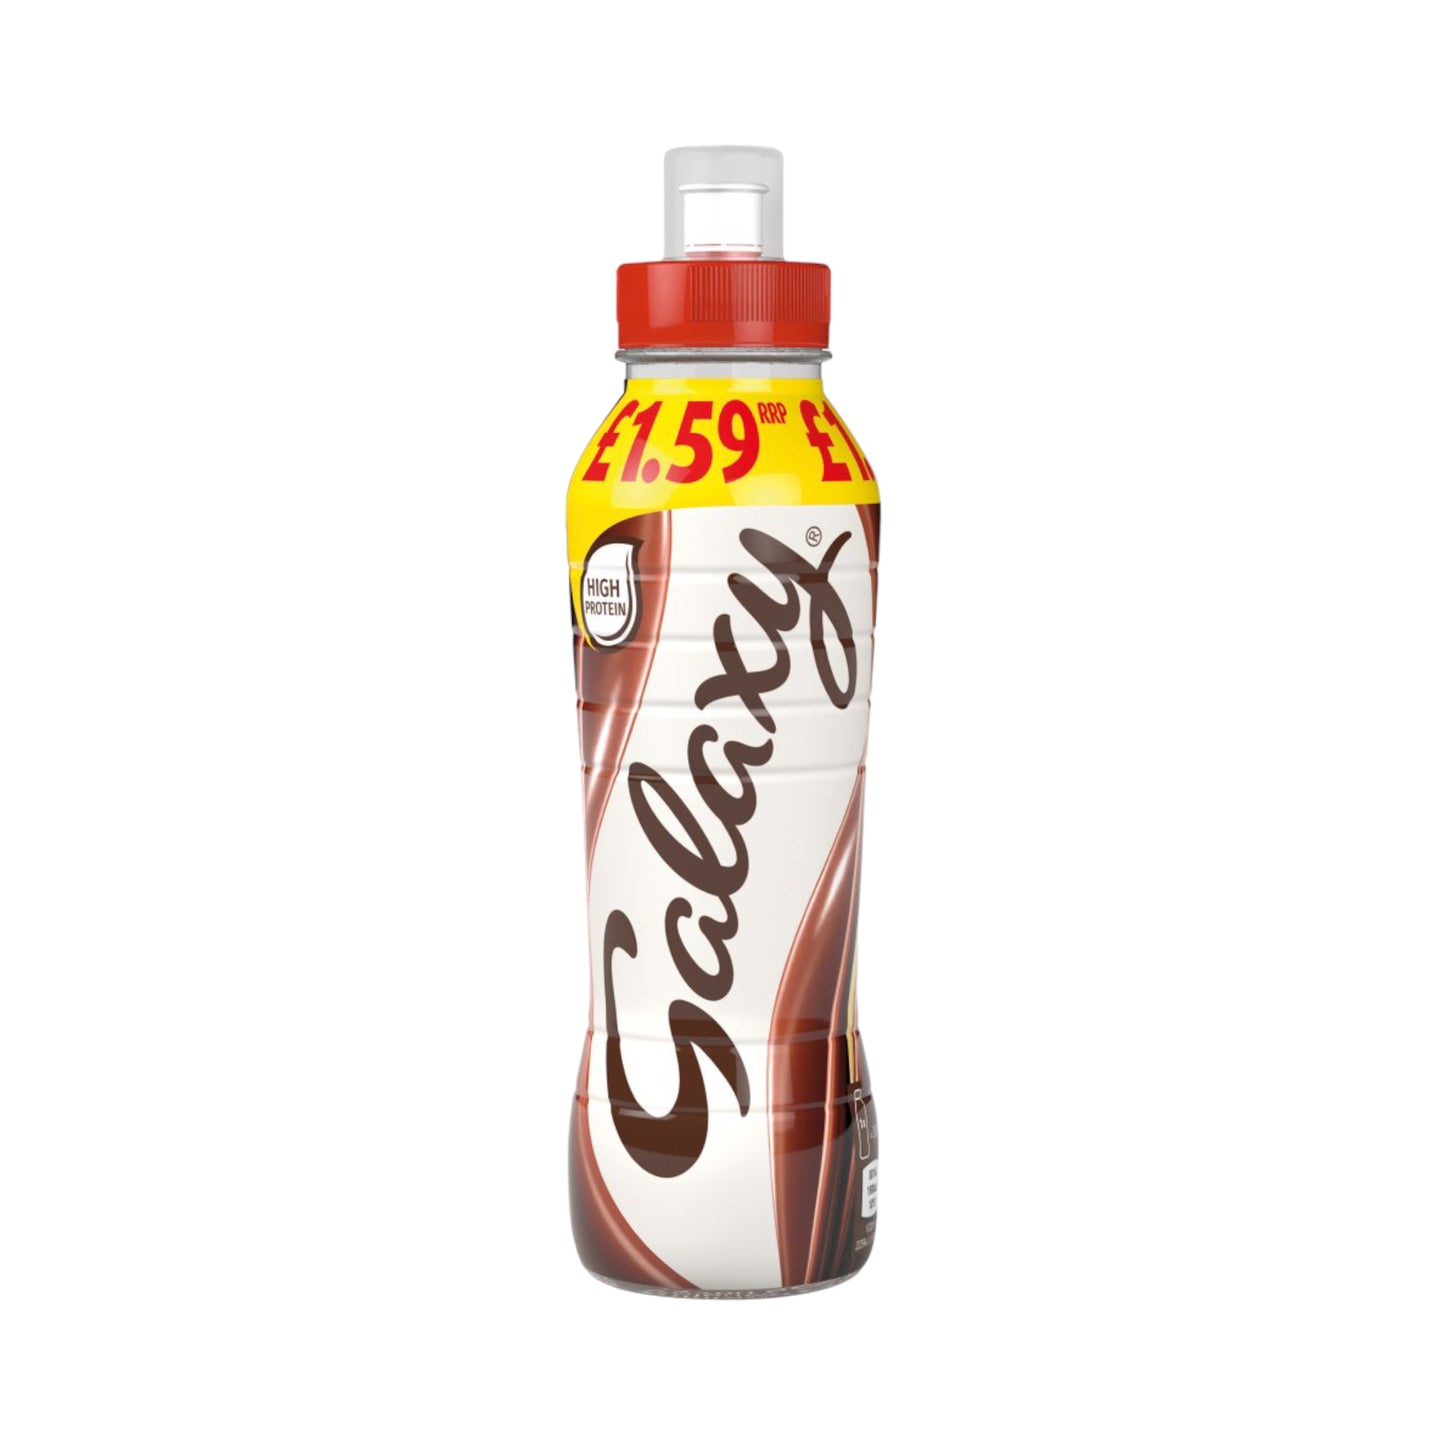 Galaxy Milk Drink - 350ml (PMP £1.59)